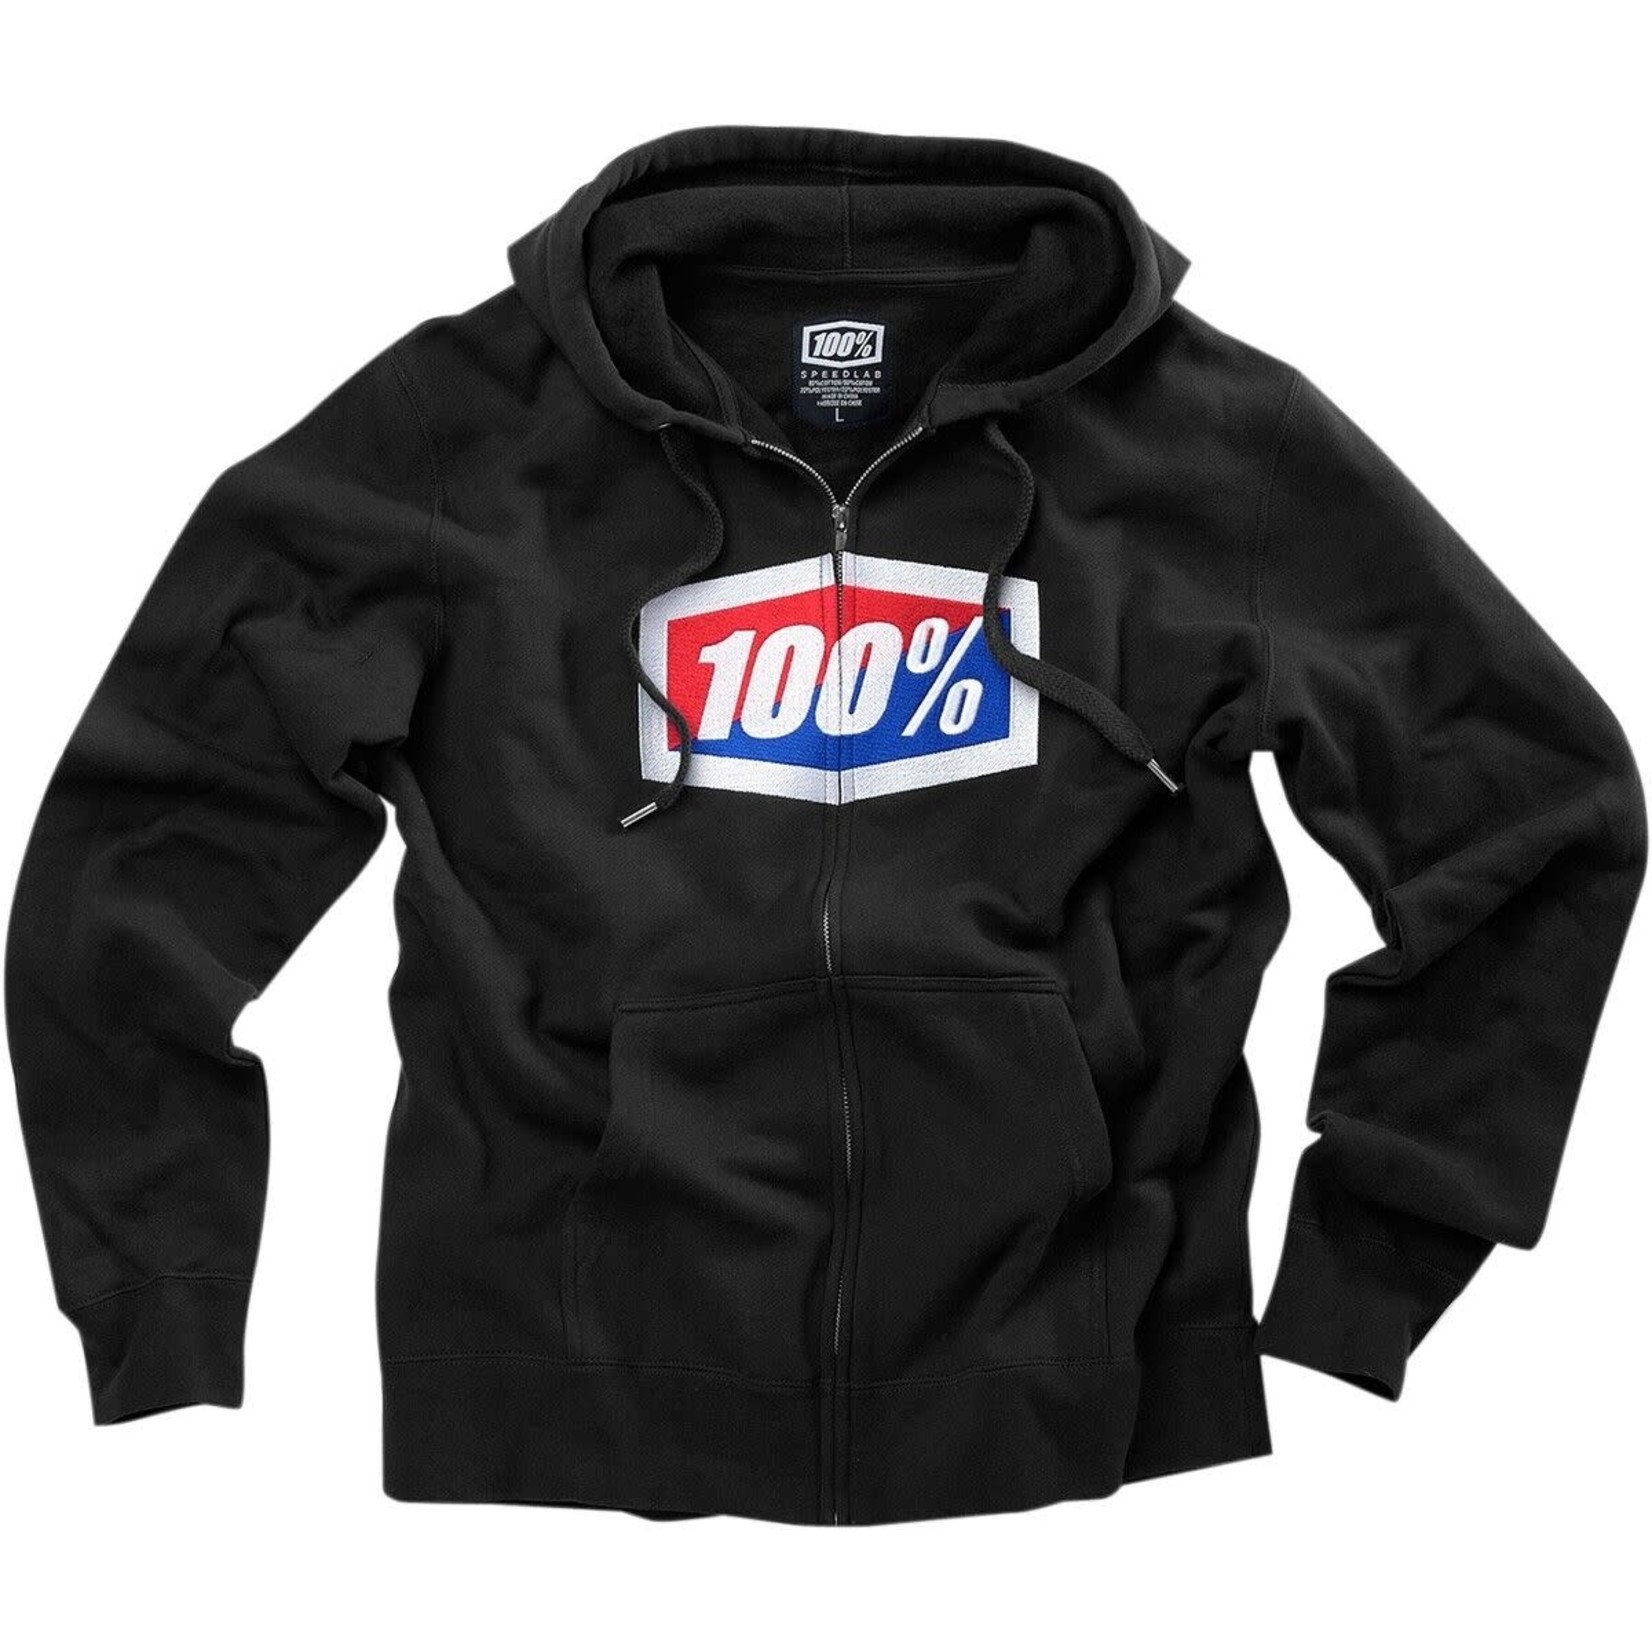 OFFICIAL" Zip Hooded Sweatshirt 100% Black SM